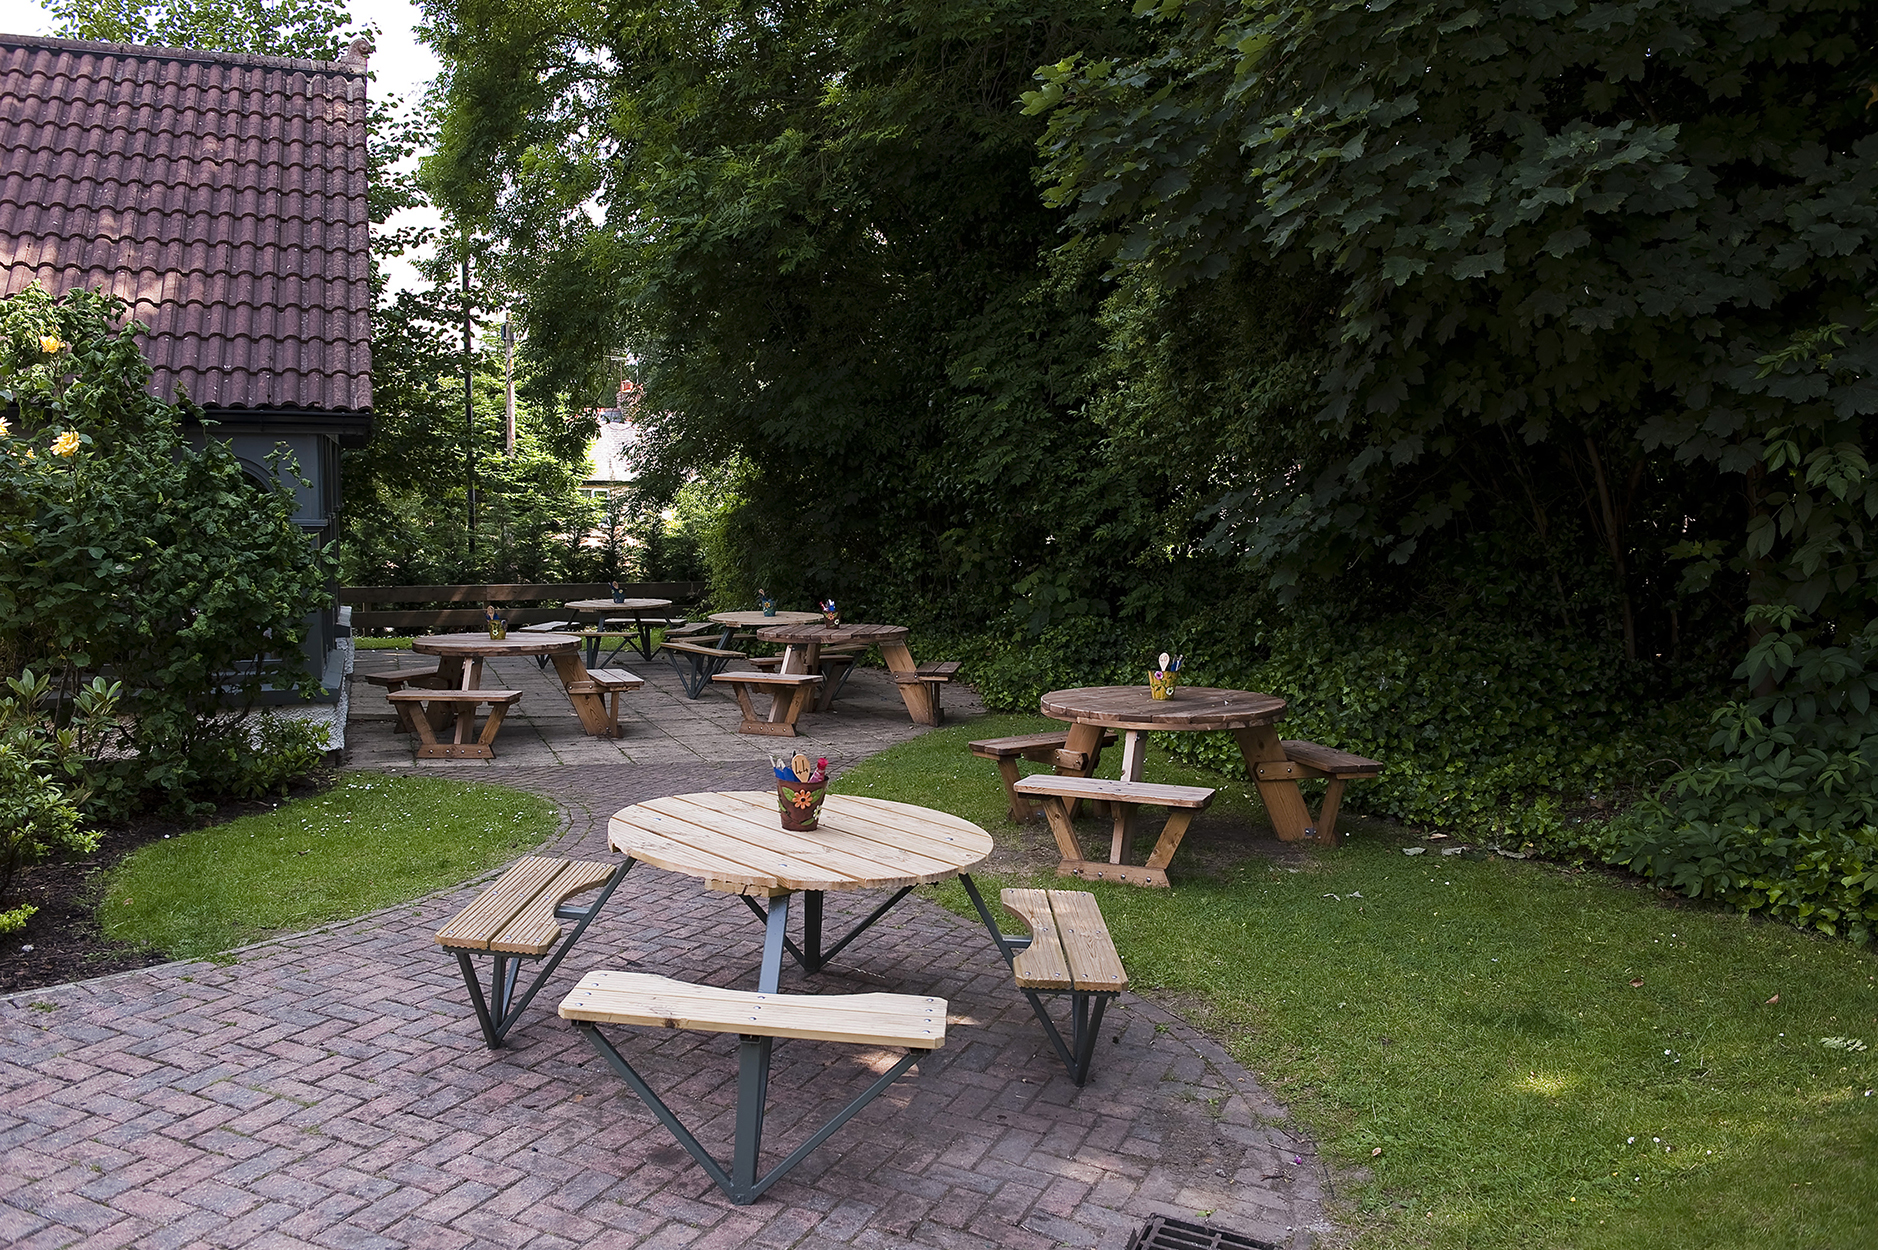 The British Oak Ale House beer garden